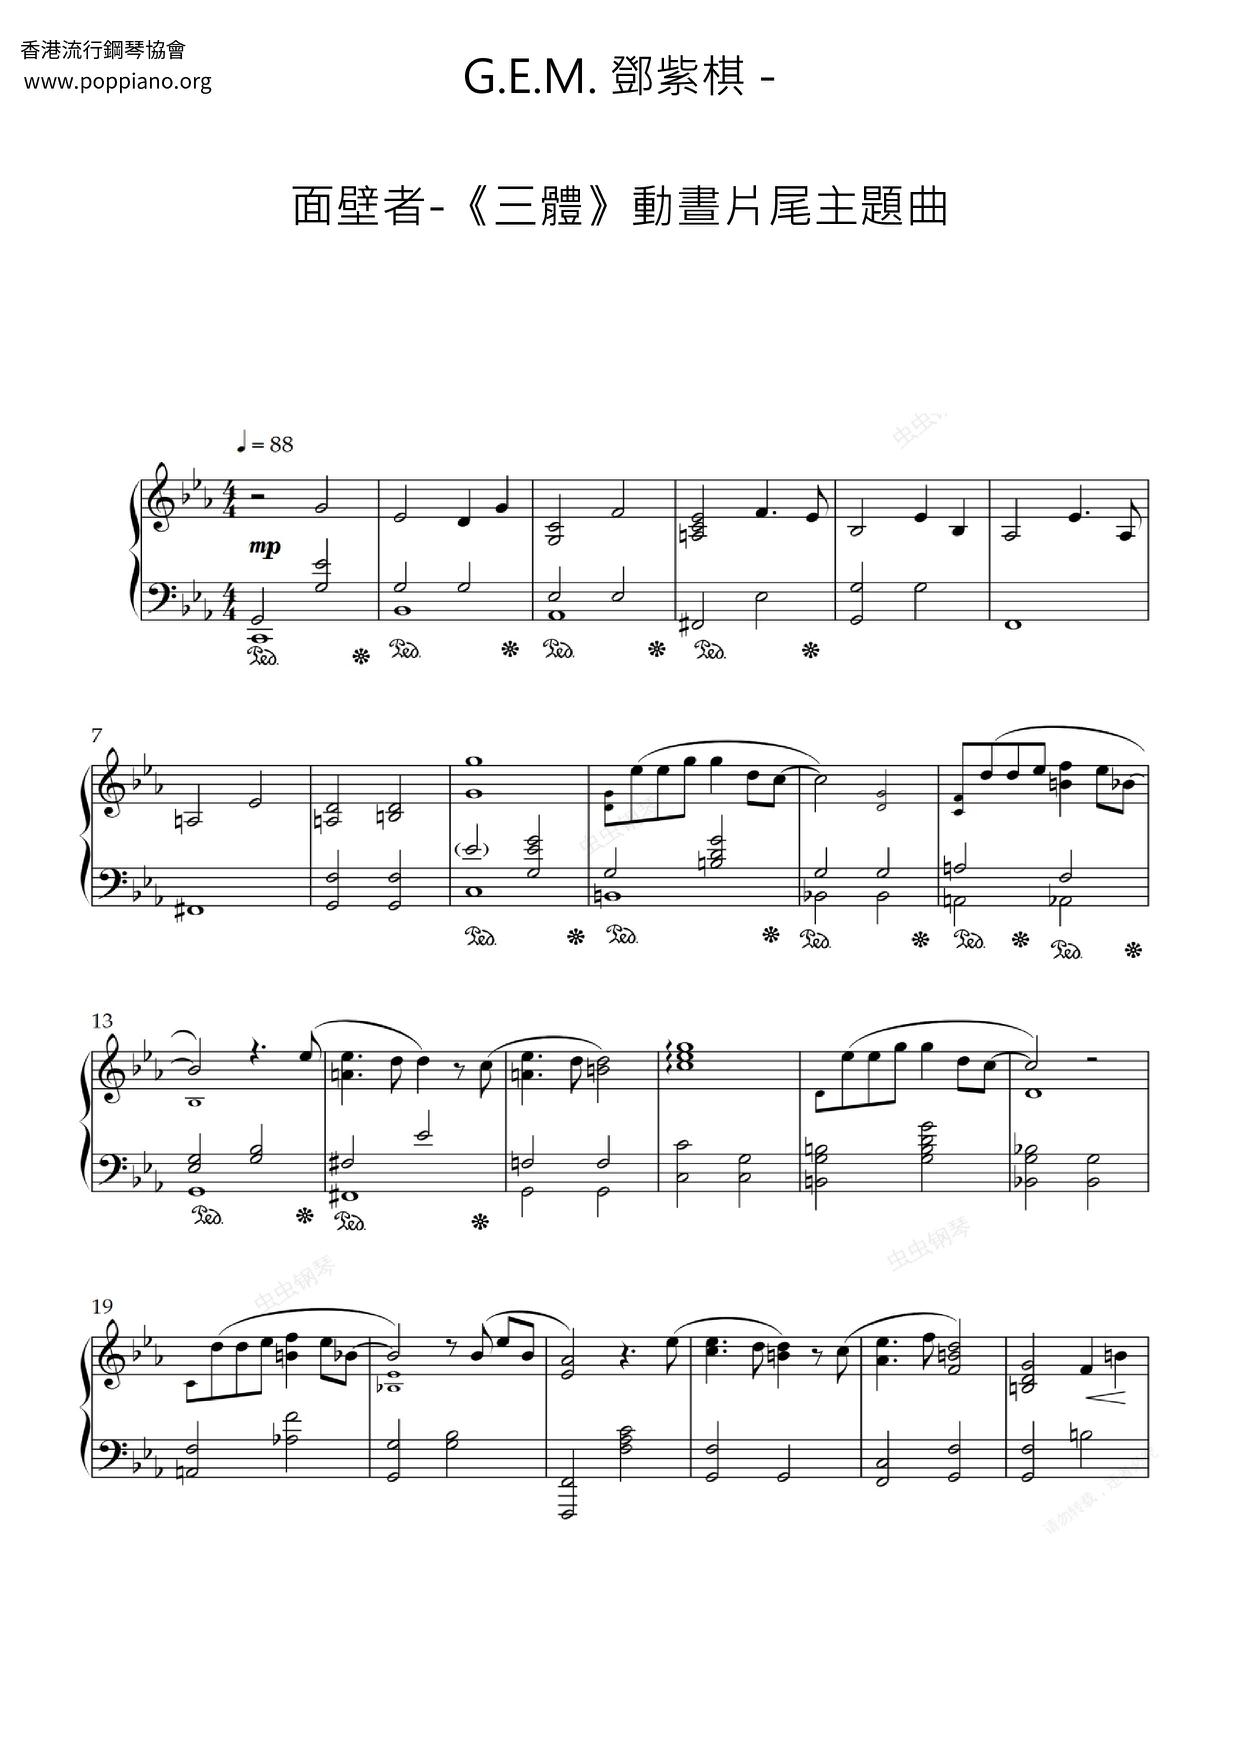 面壁者-《三體》動晝片尾主題曲ピアノ譜